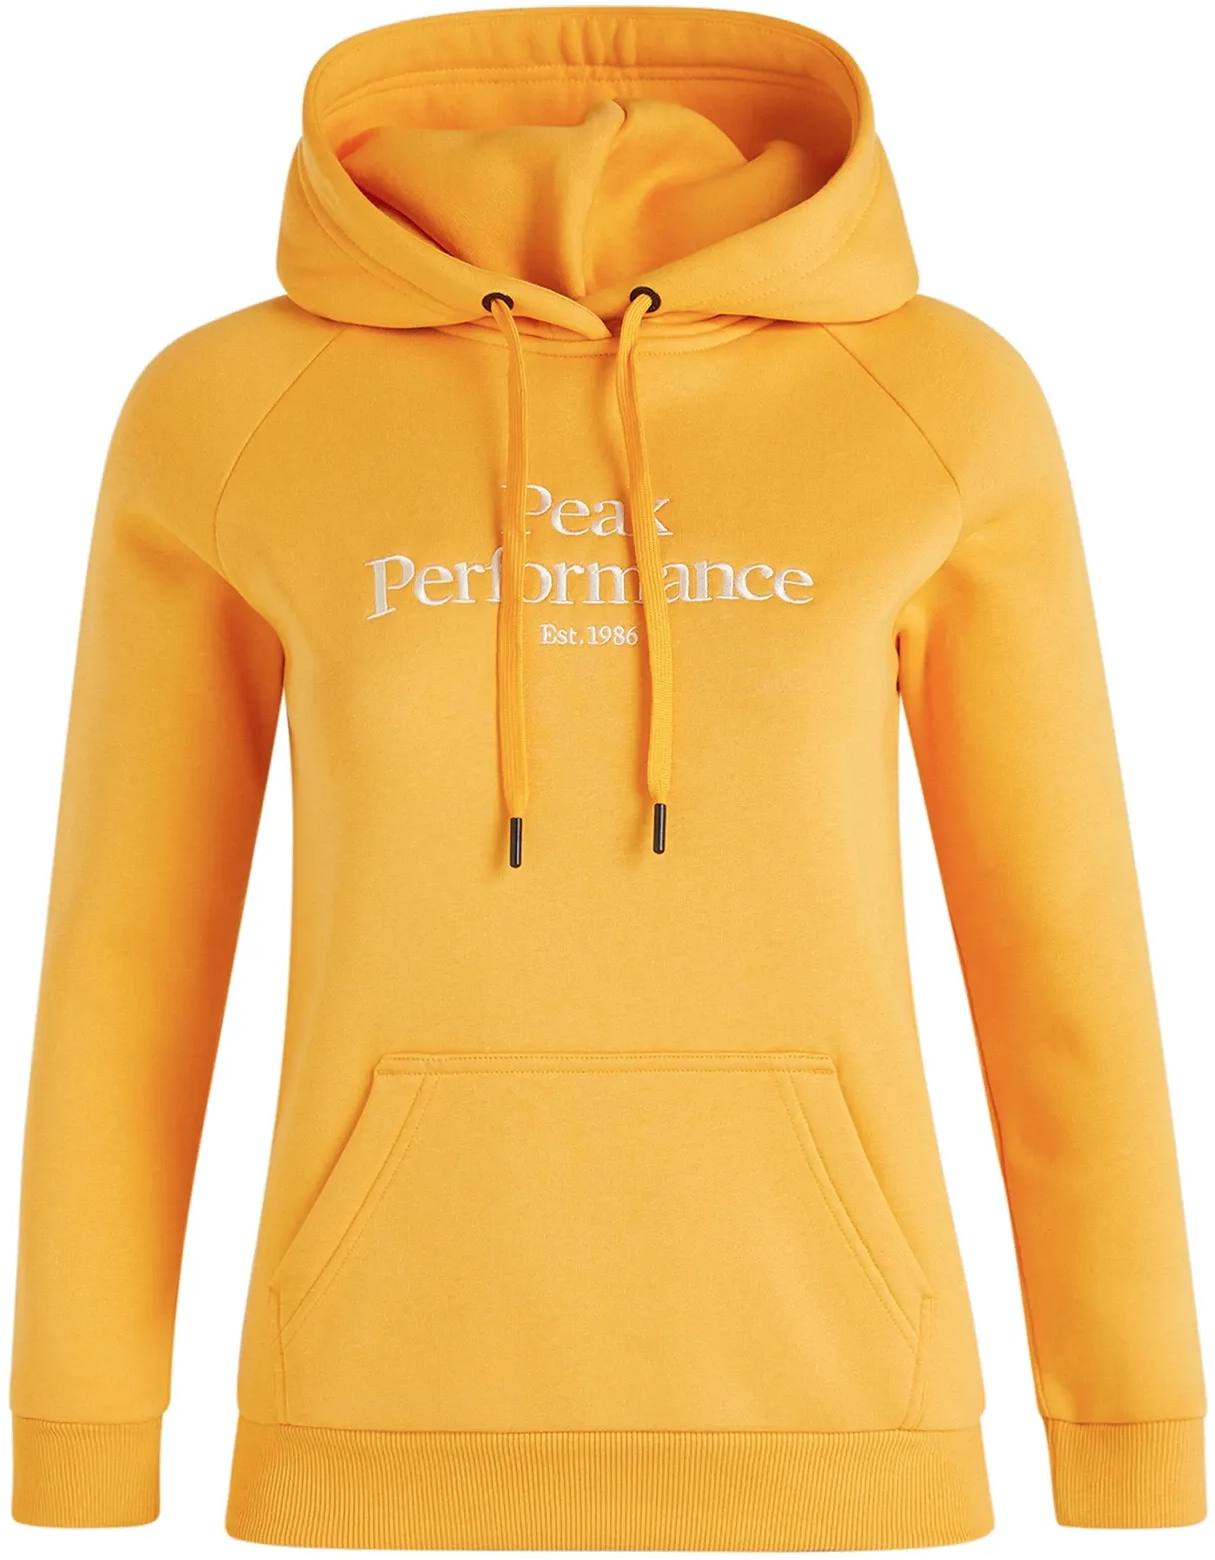 Peak Performance Women’s Original Hood Yellow L